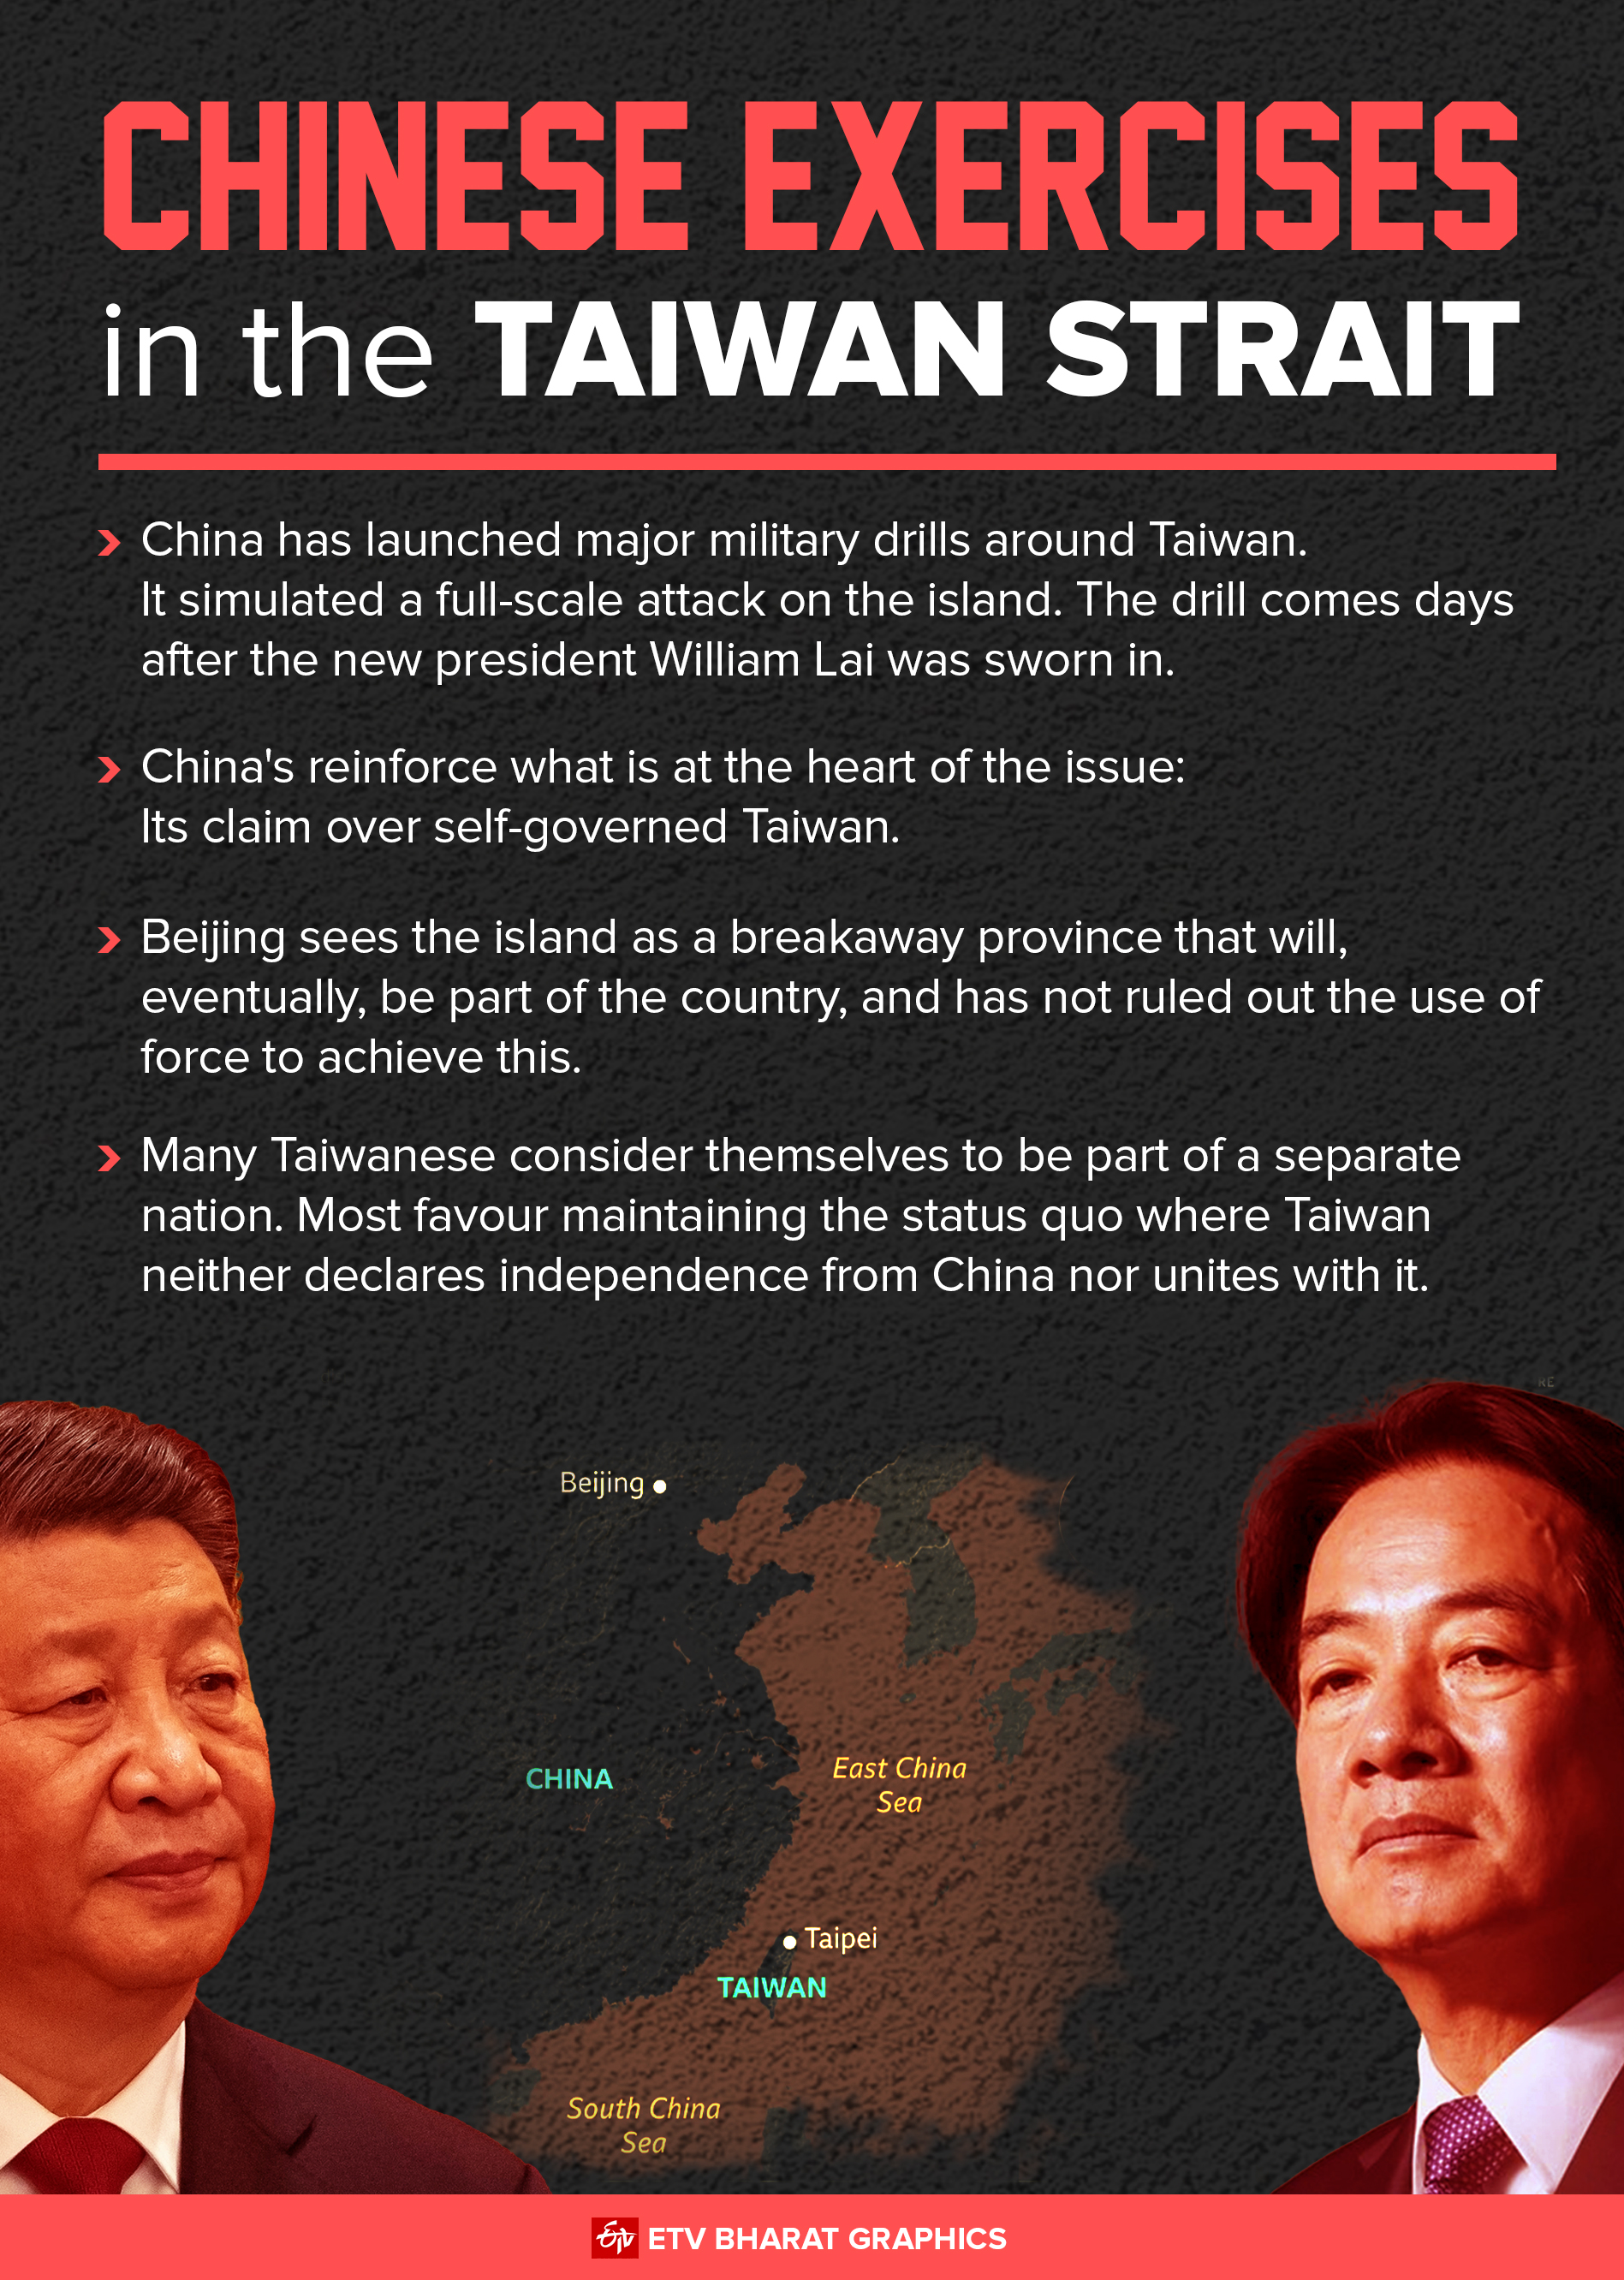 Reasons Behind China's Increased Military Drills Around Taiwan